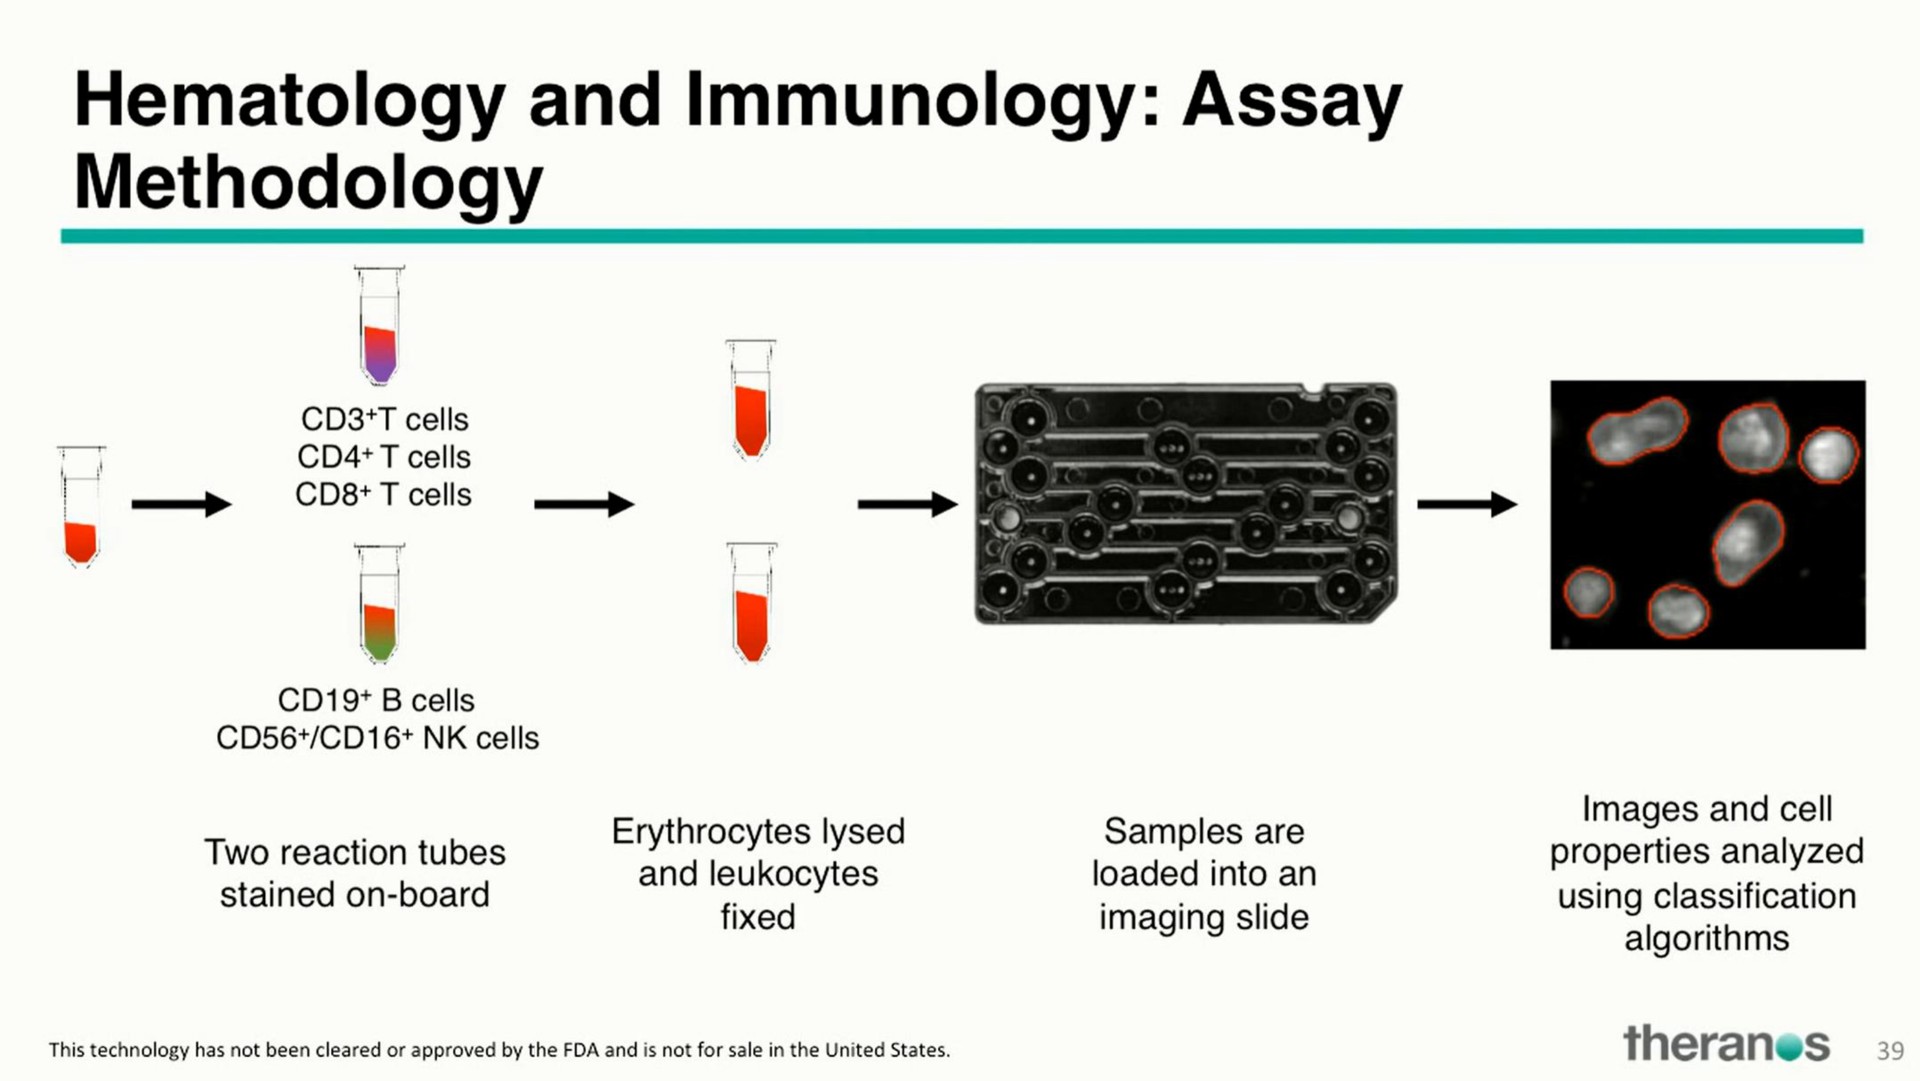 hematology and immunology assay methodology | Theranos